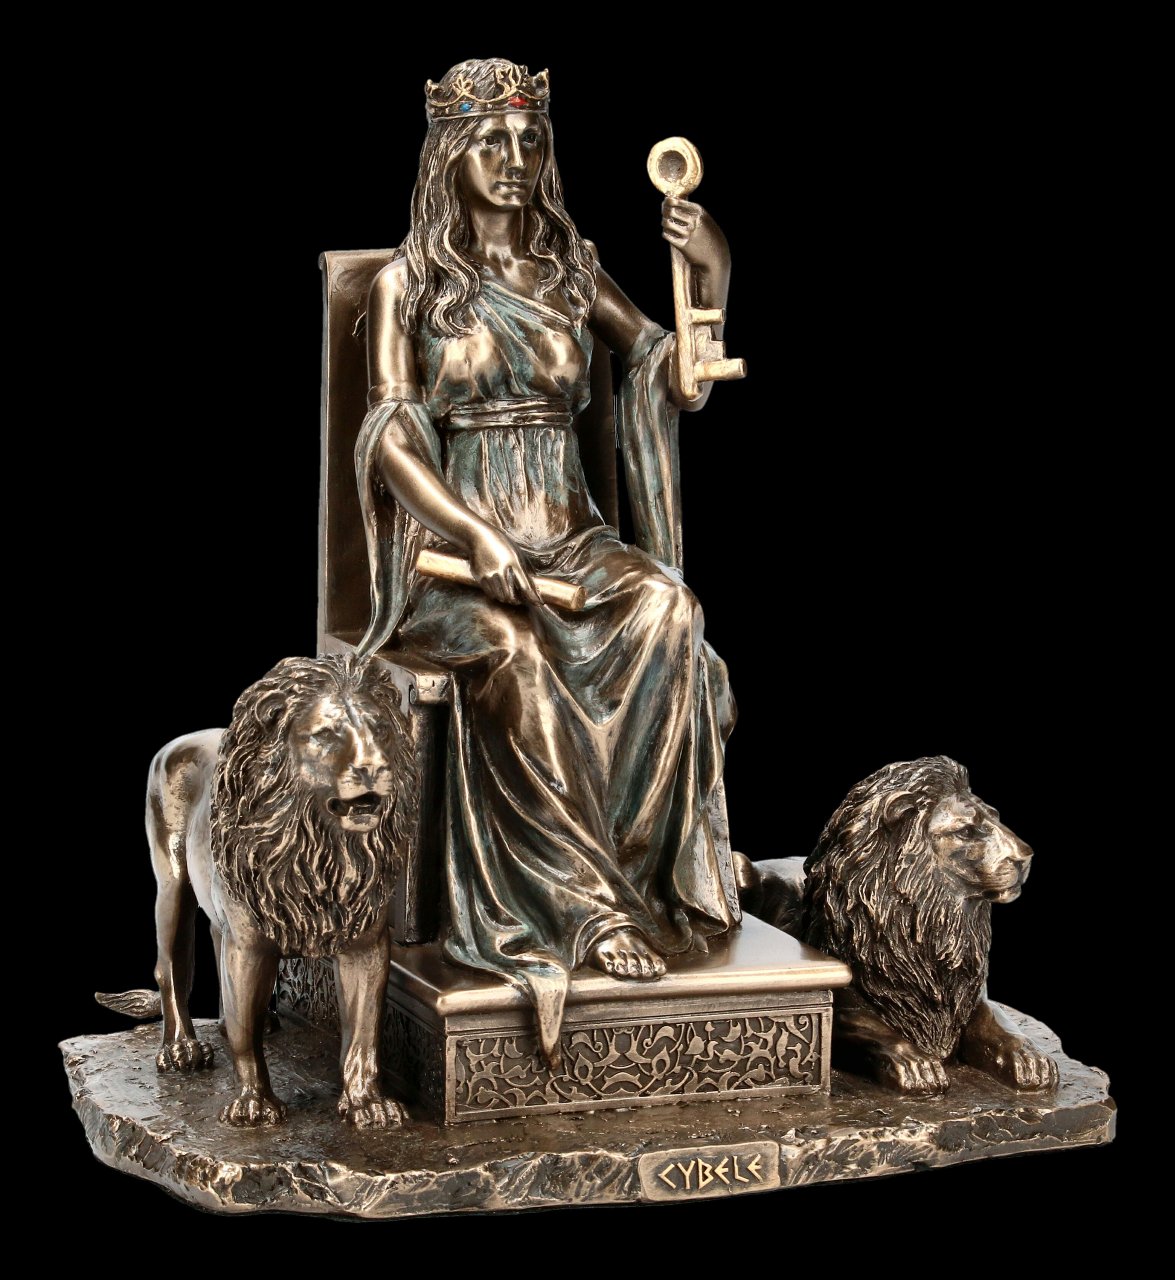 Cybele Figurine - Greek Goddess